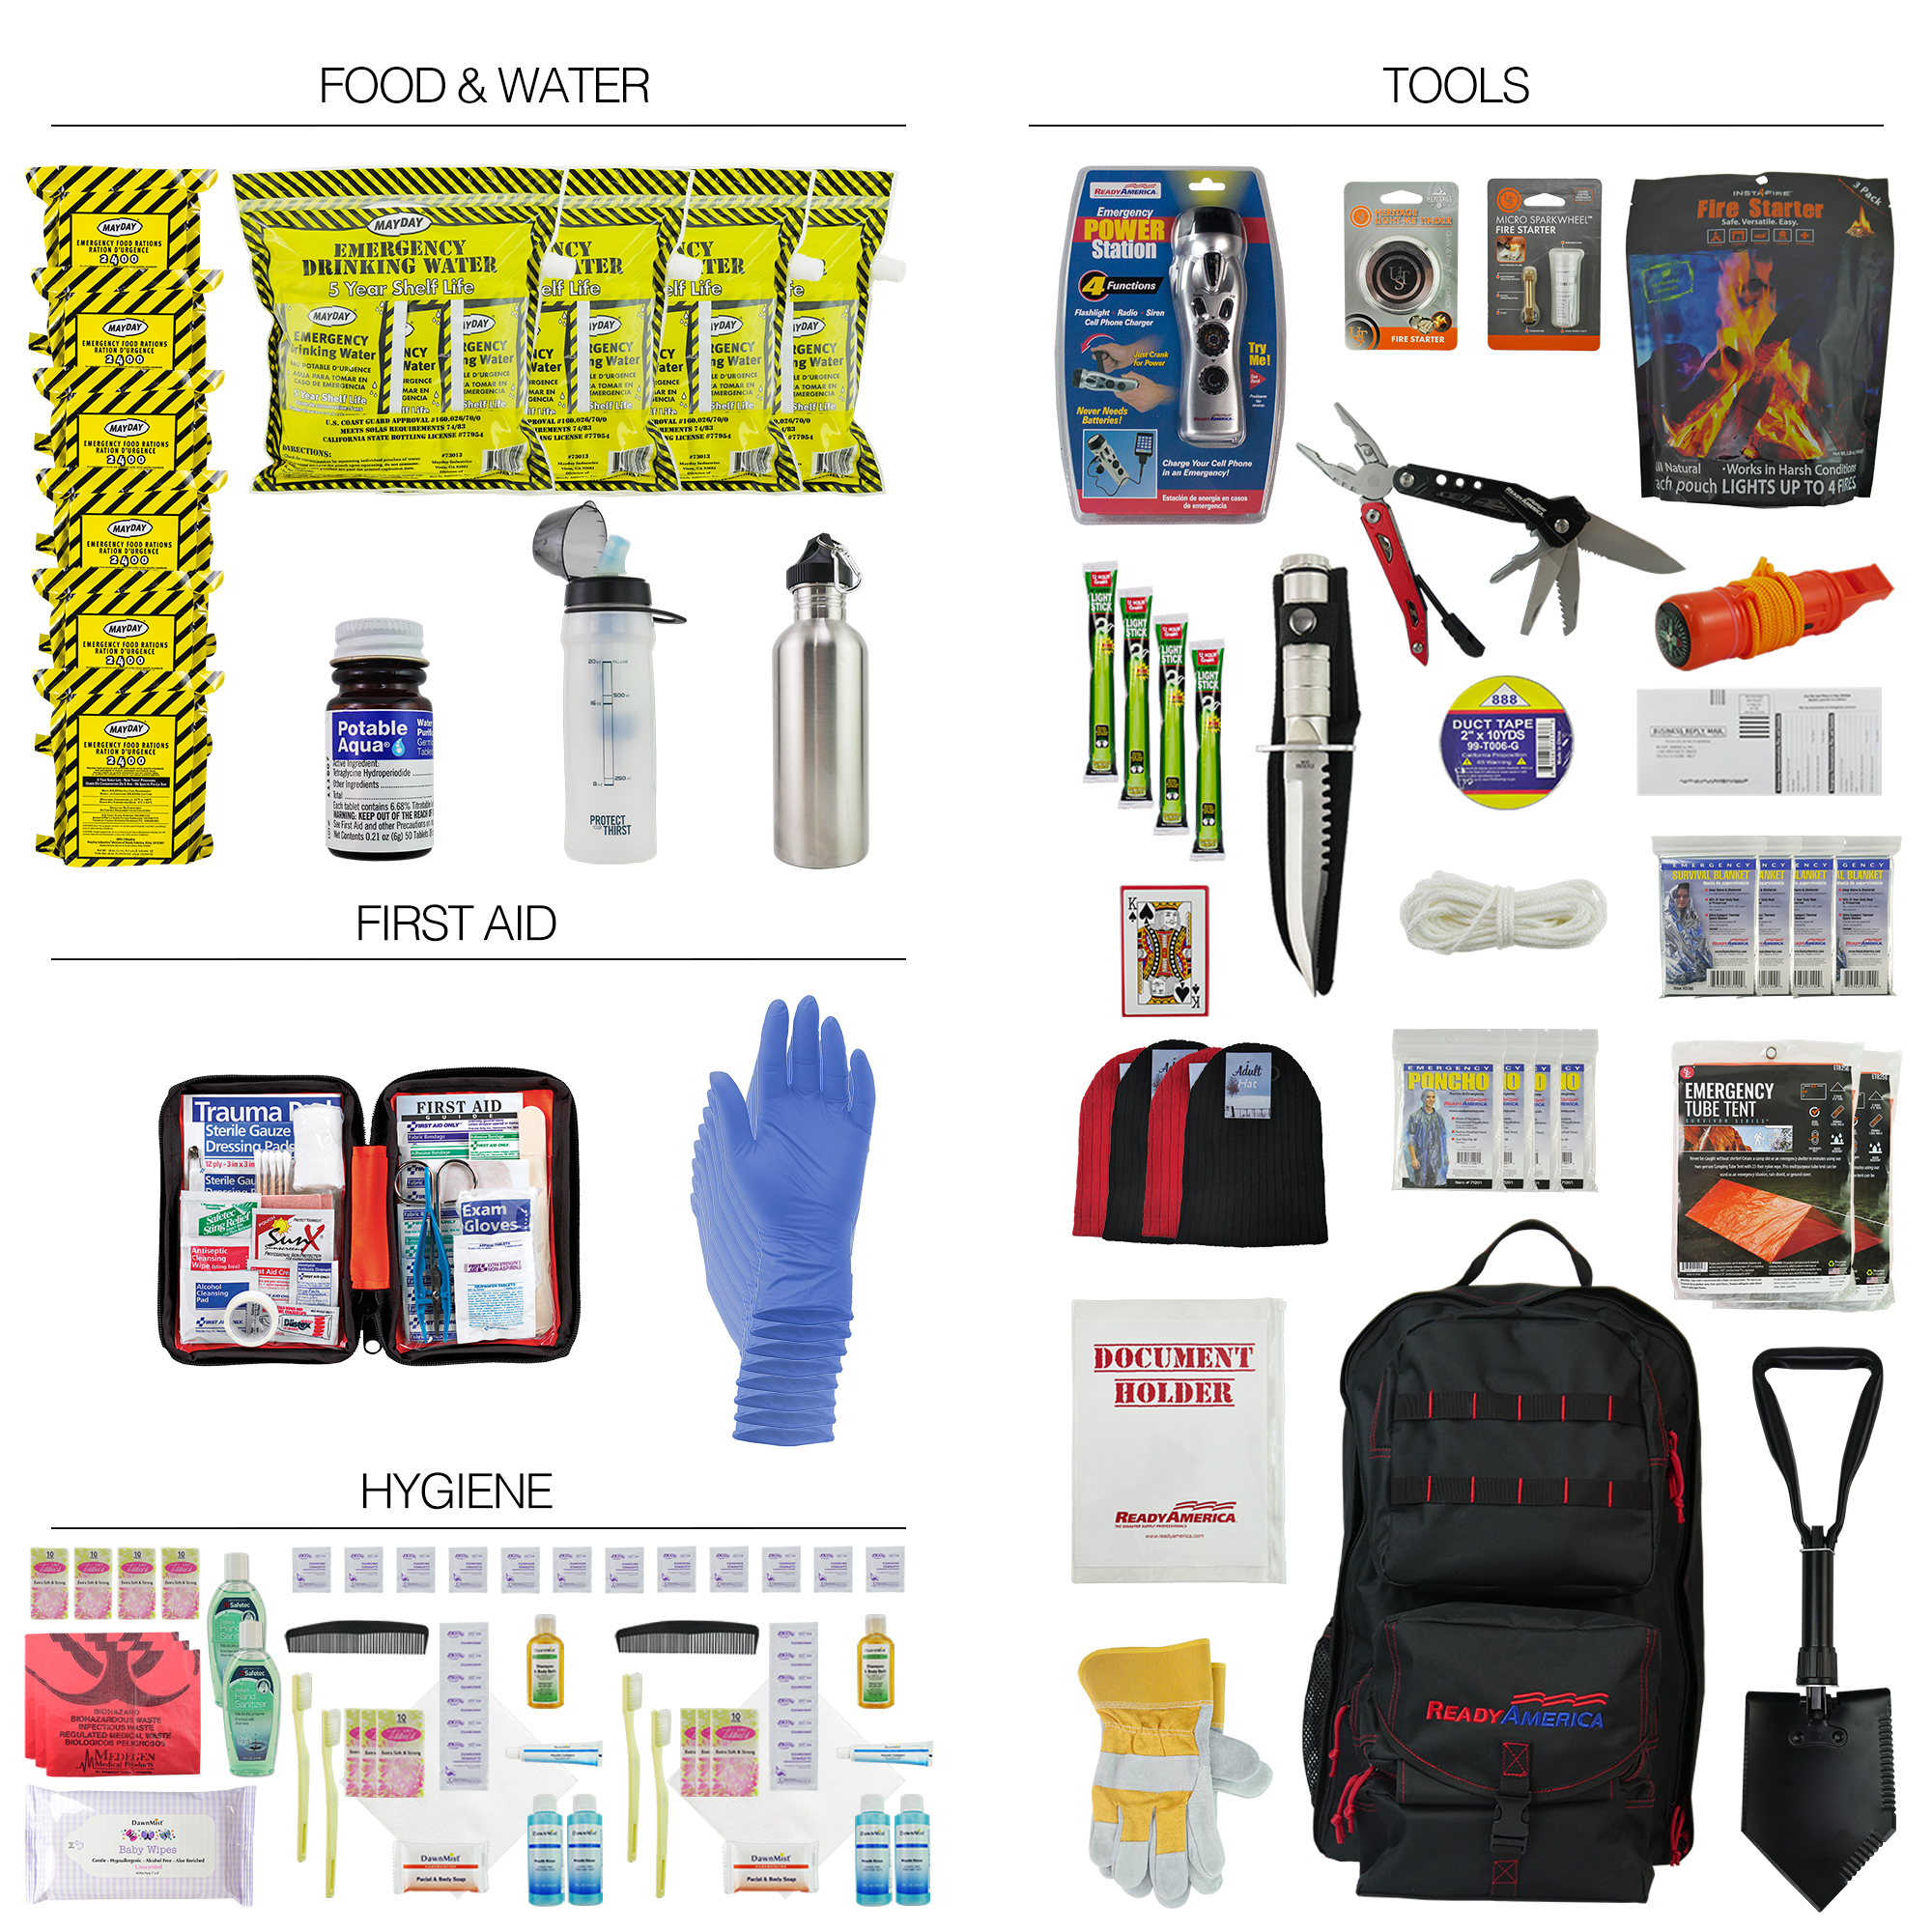 The 21 best emergency preparedness kits, per survival experts